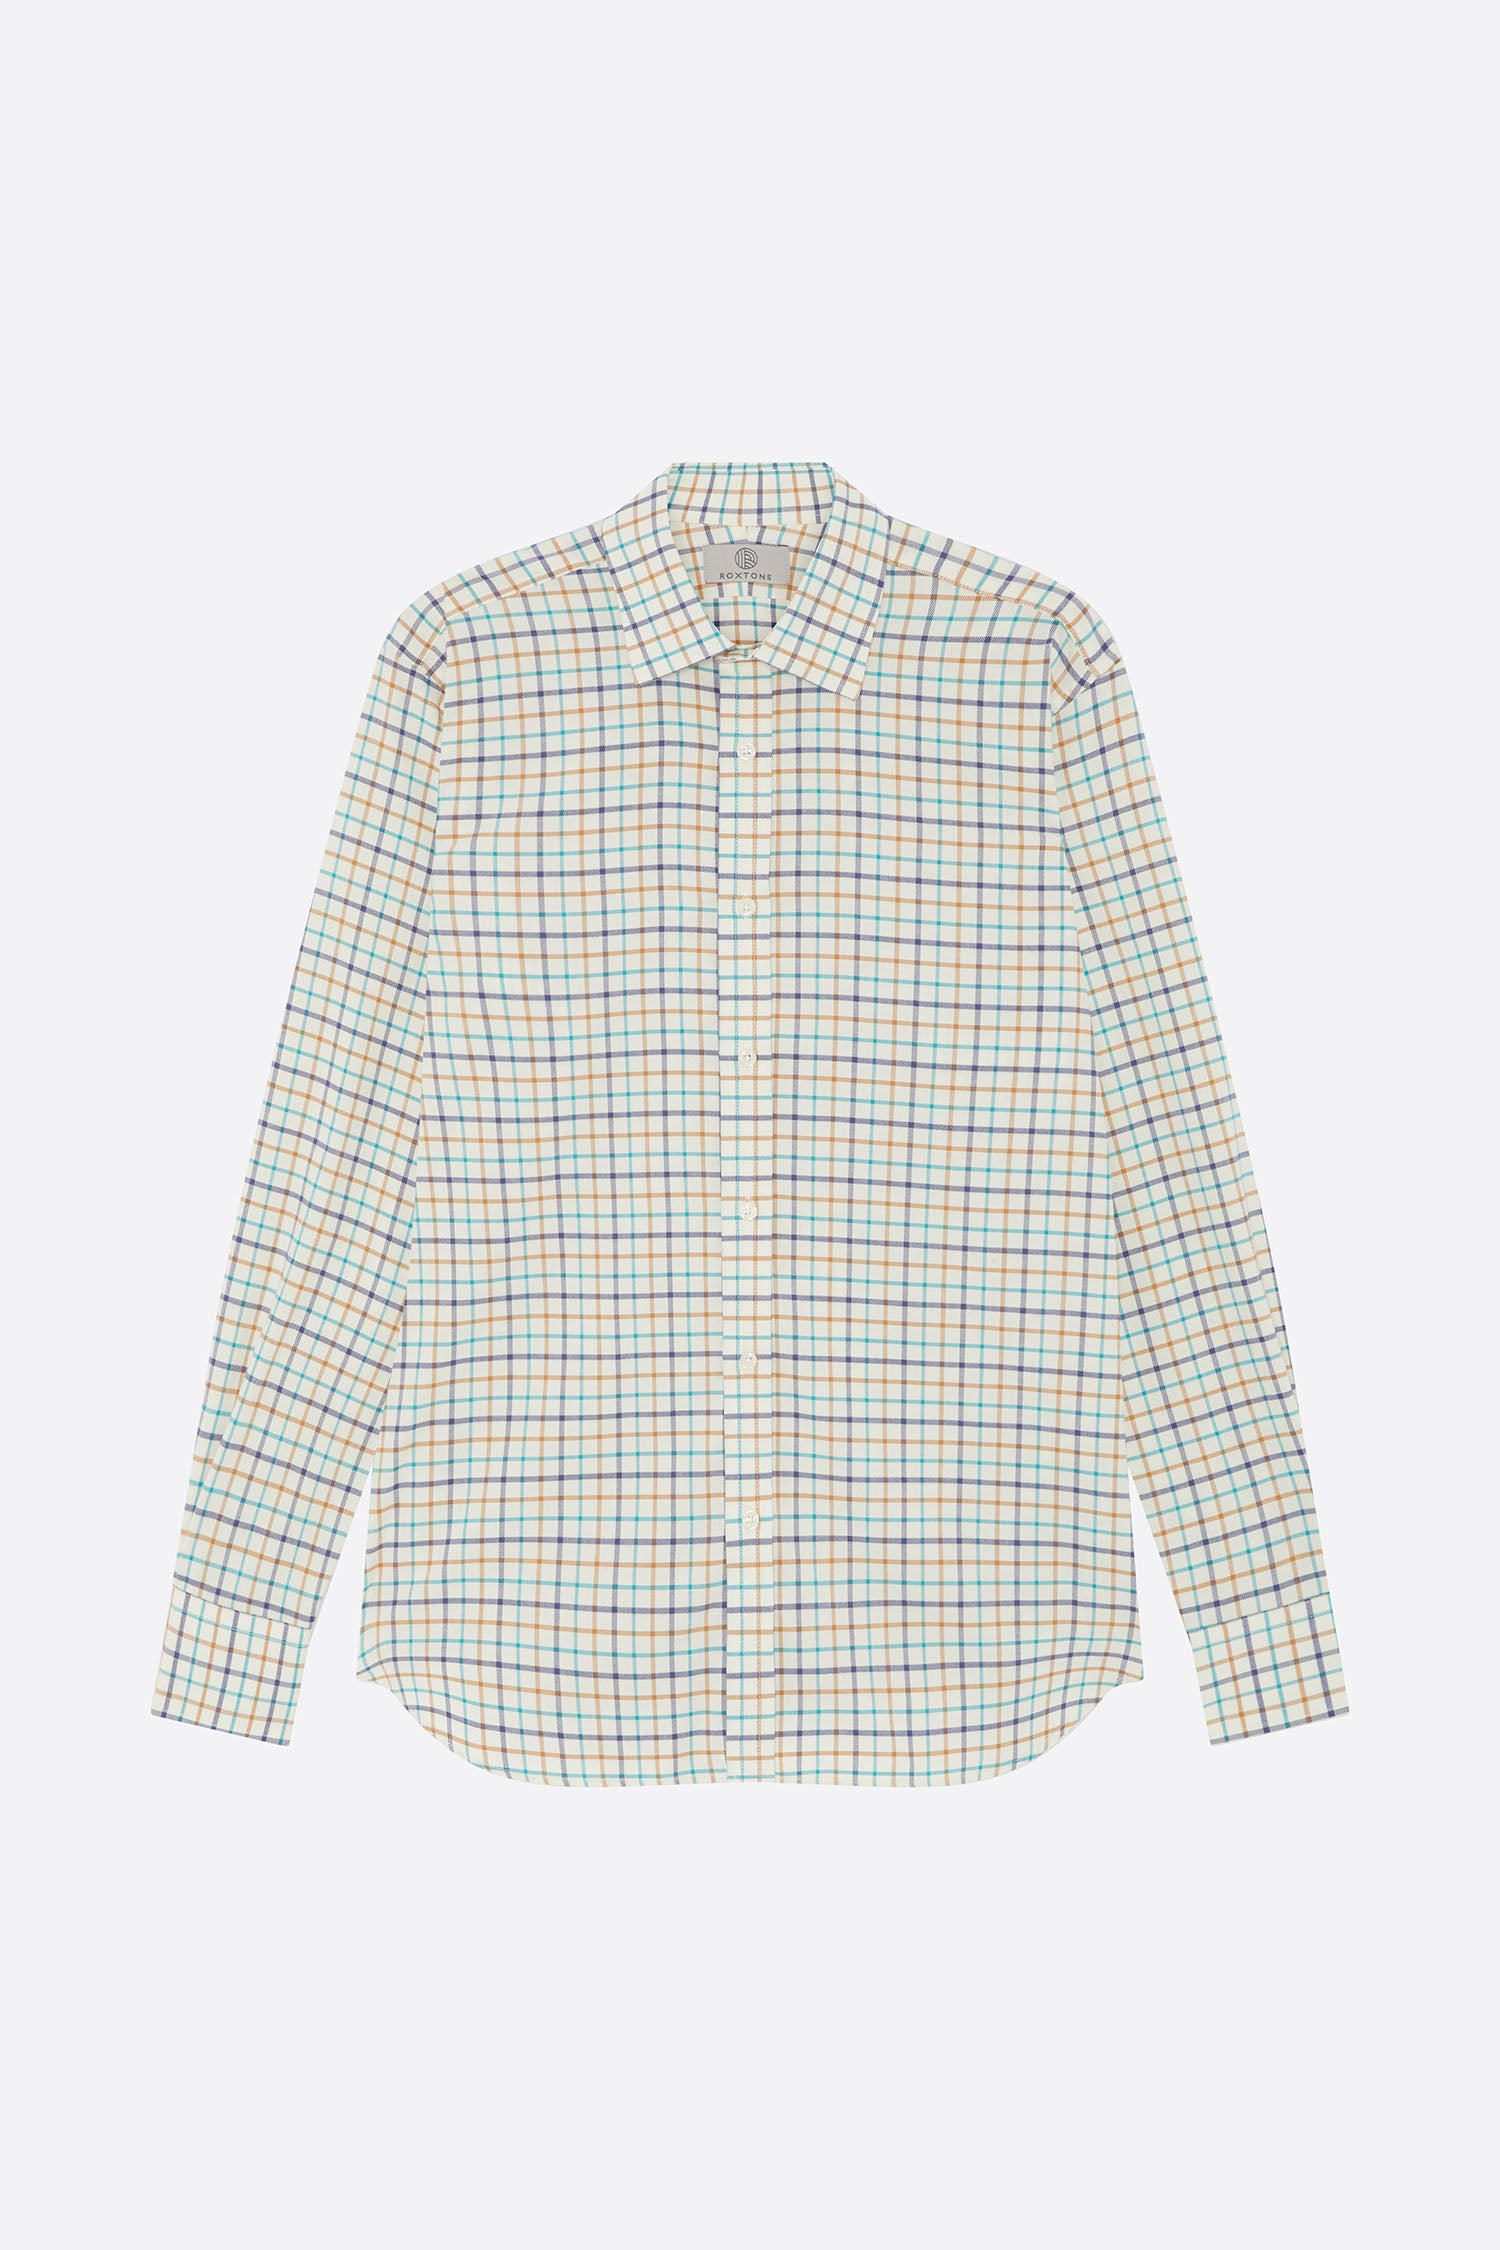 Roxtons - Lambourn Check Shirt